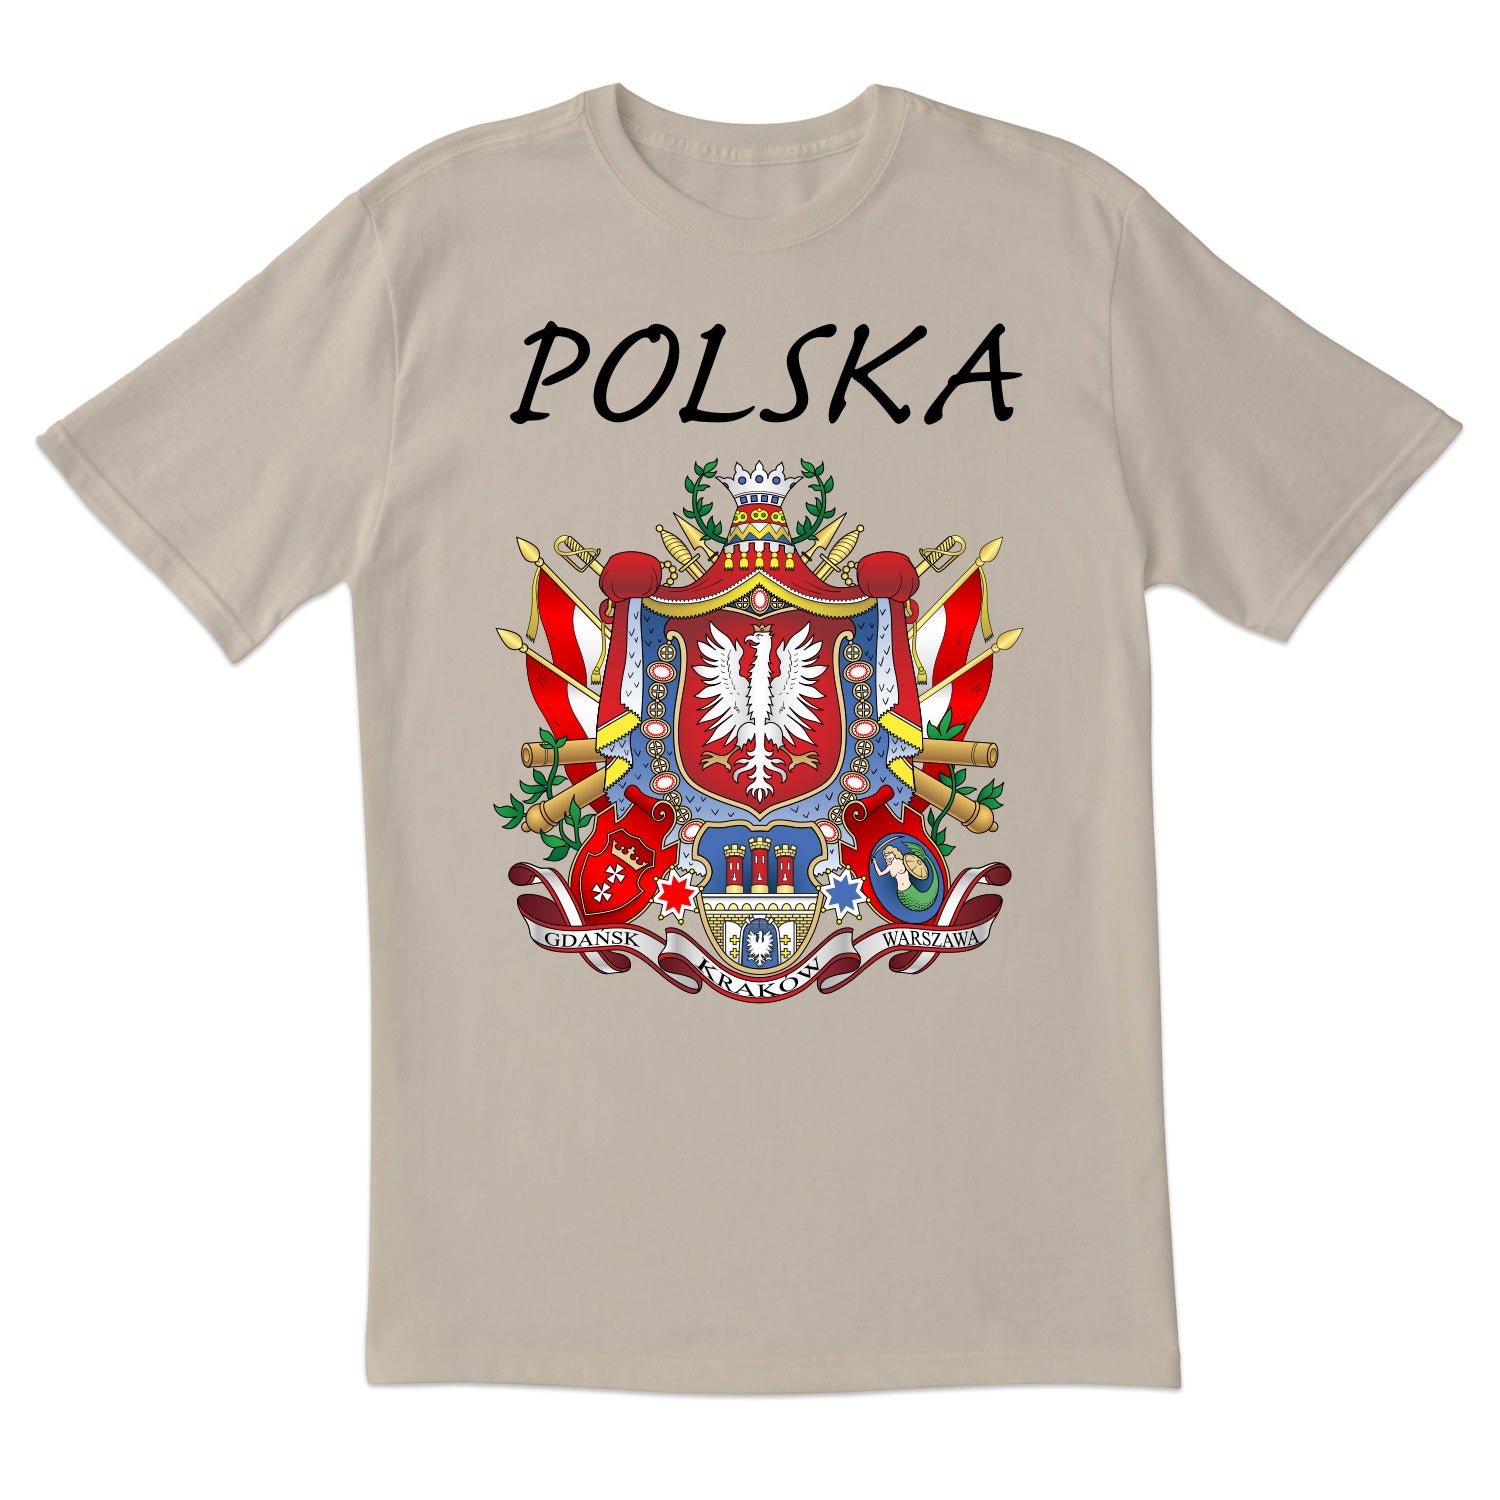 Polska With Three Cities Short Sleeve Tshirt